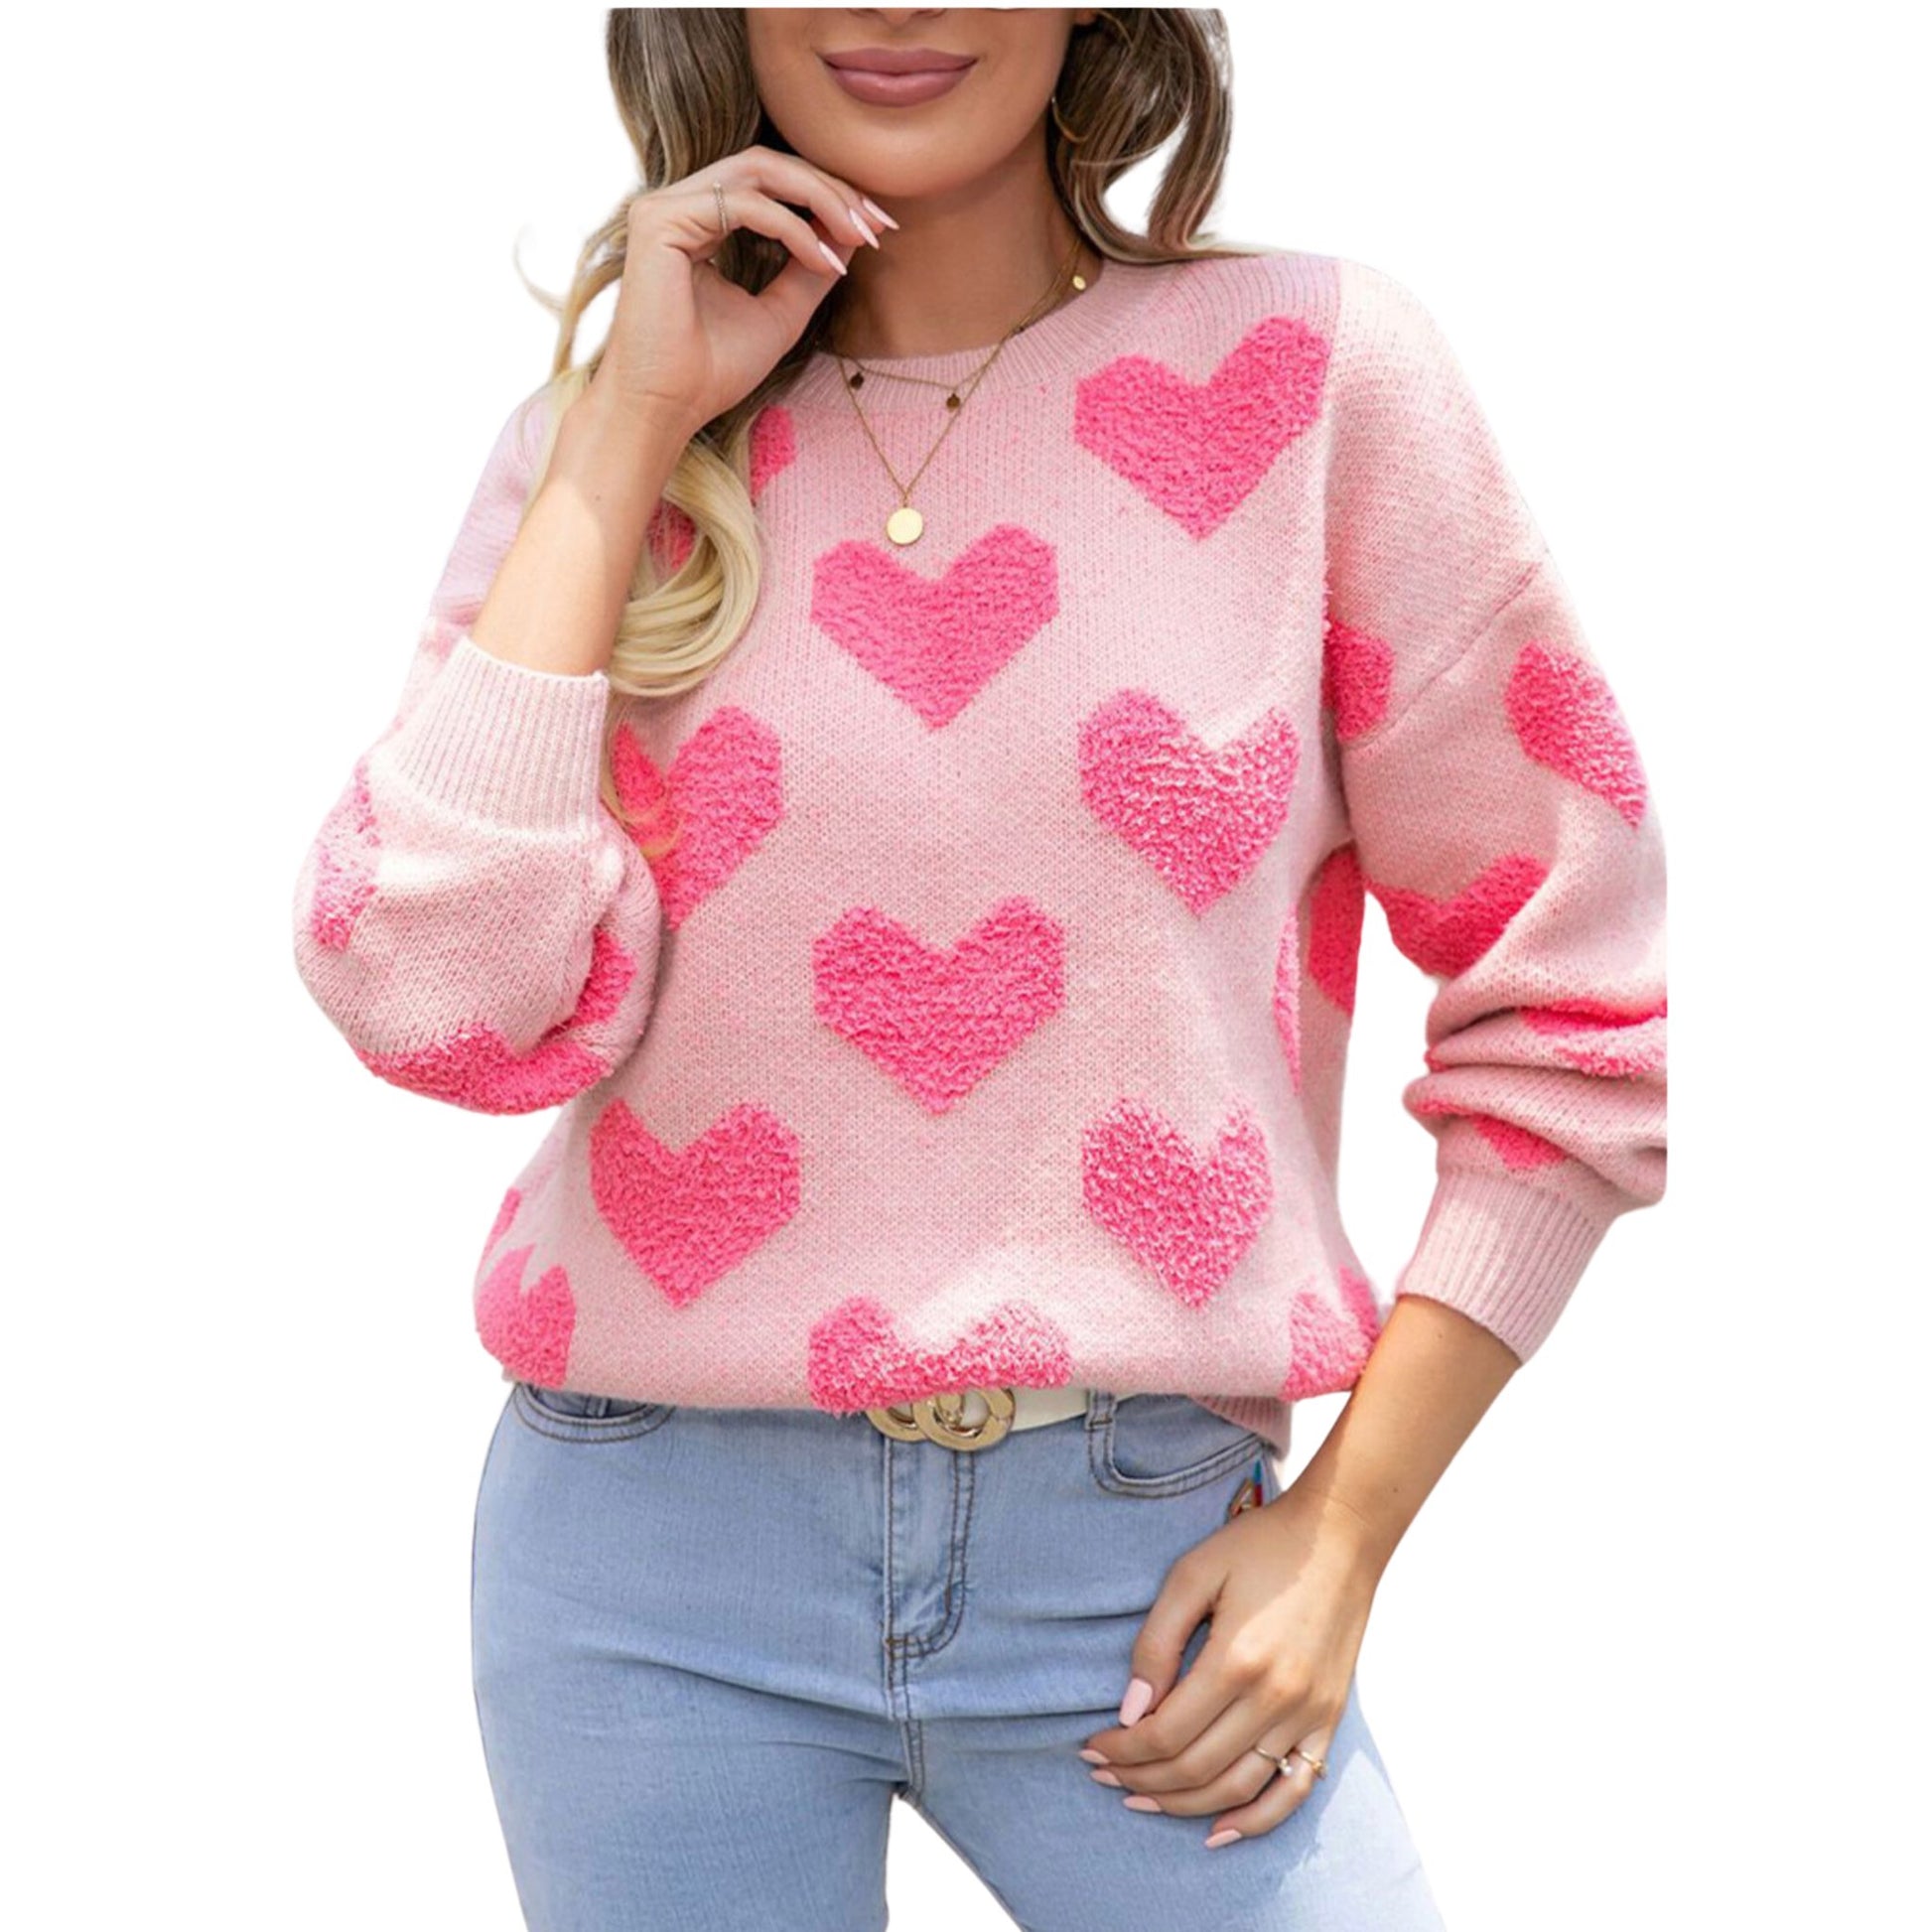 Heart knit sweater - Lavish life LLC 